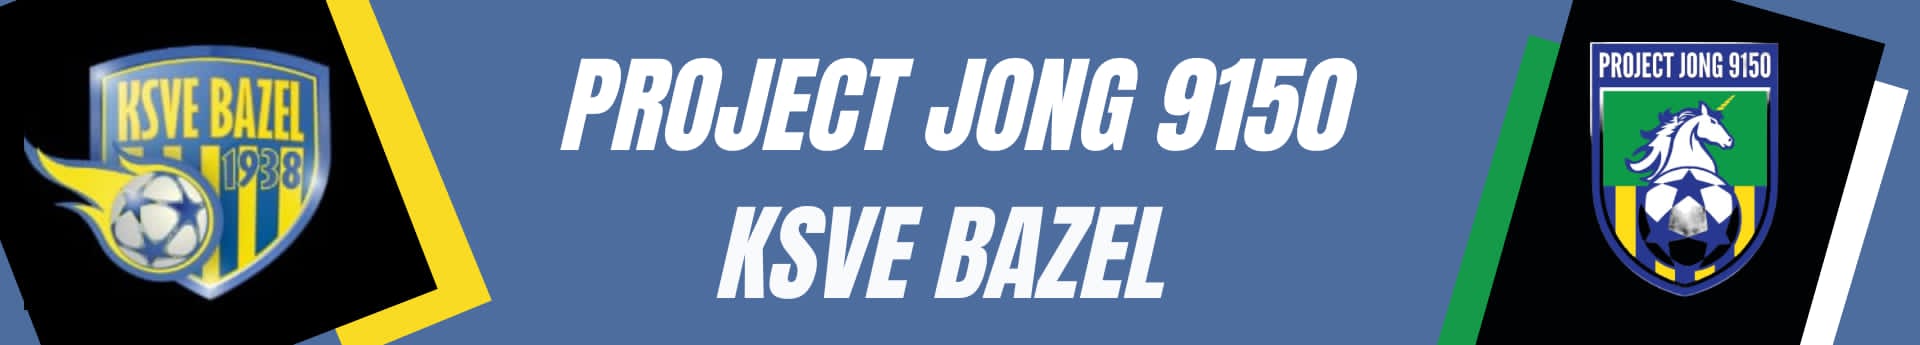 Project Jong 9150 KSVE BAZEL Title Image